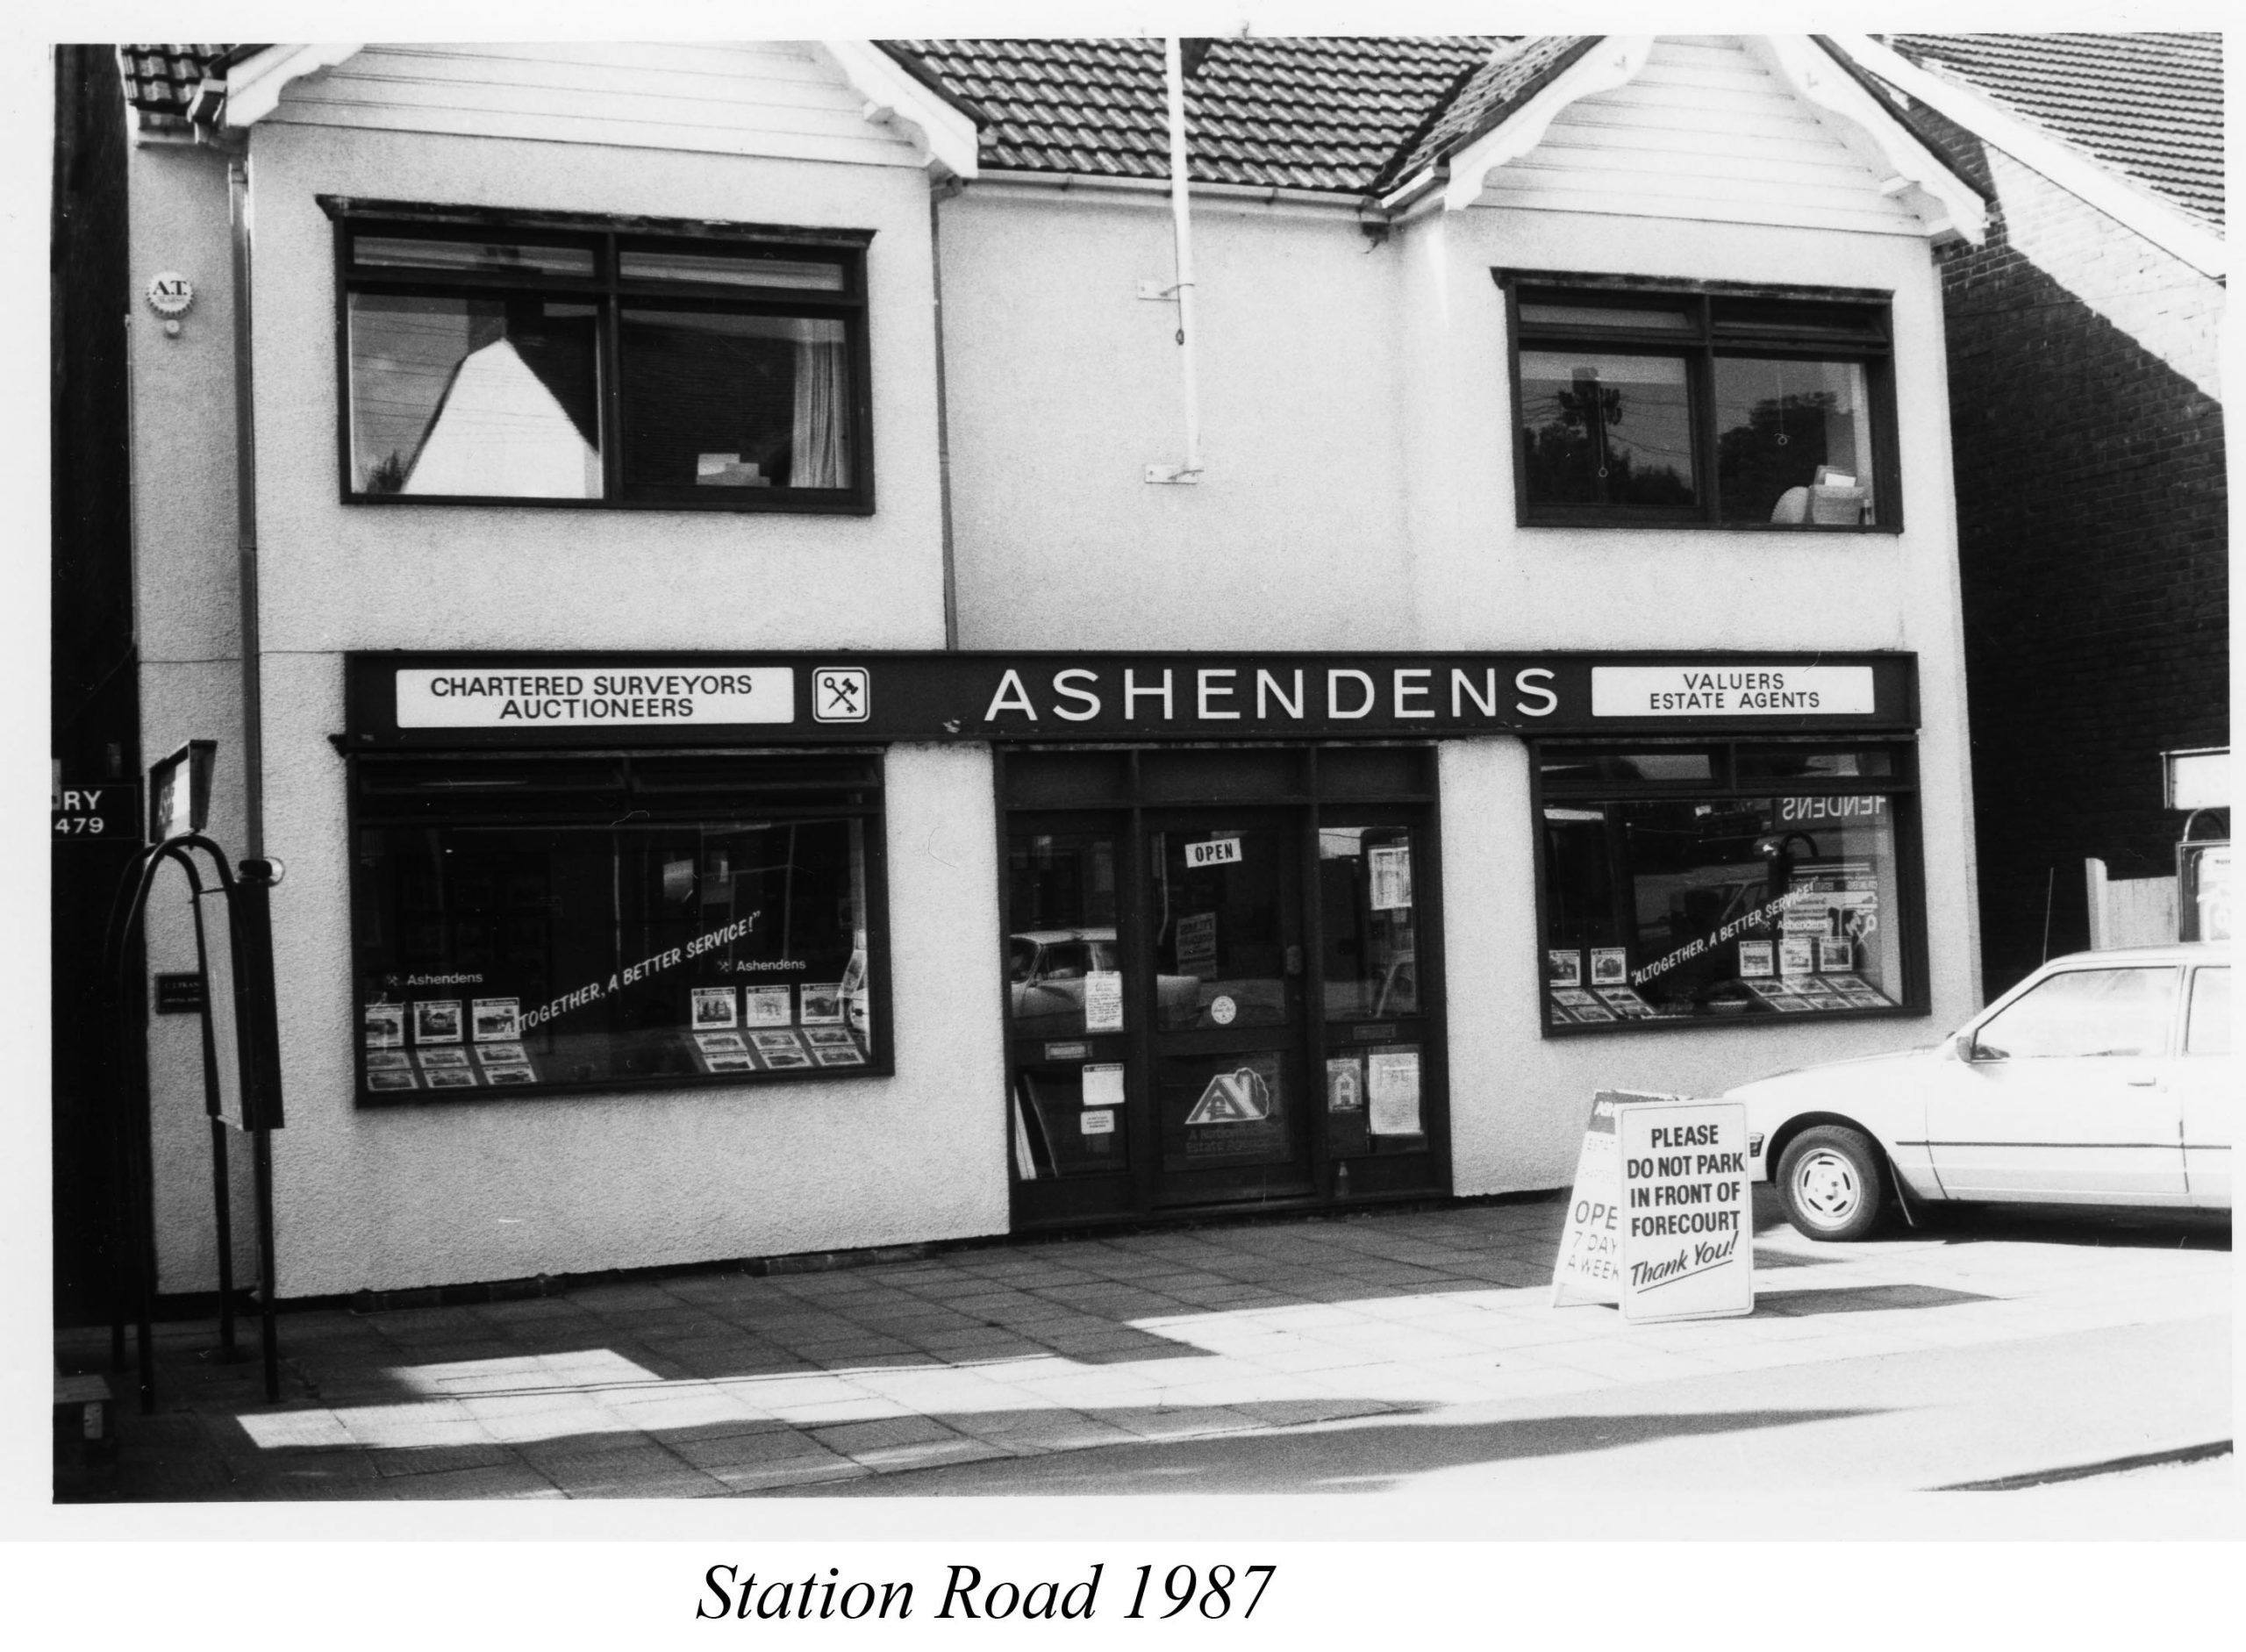 Ashendens Surveyors 1987, Station Road